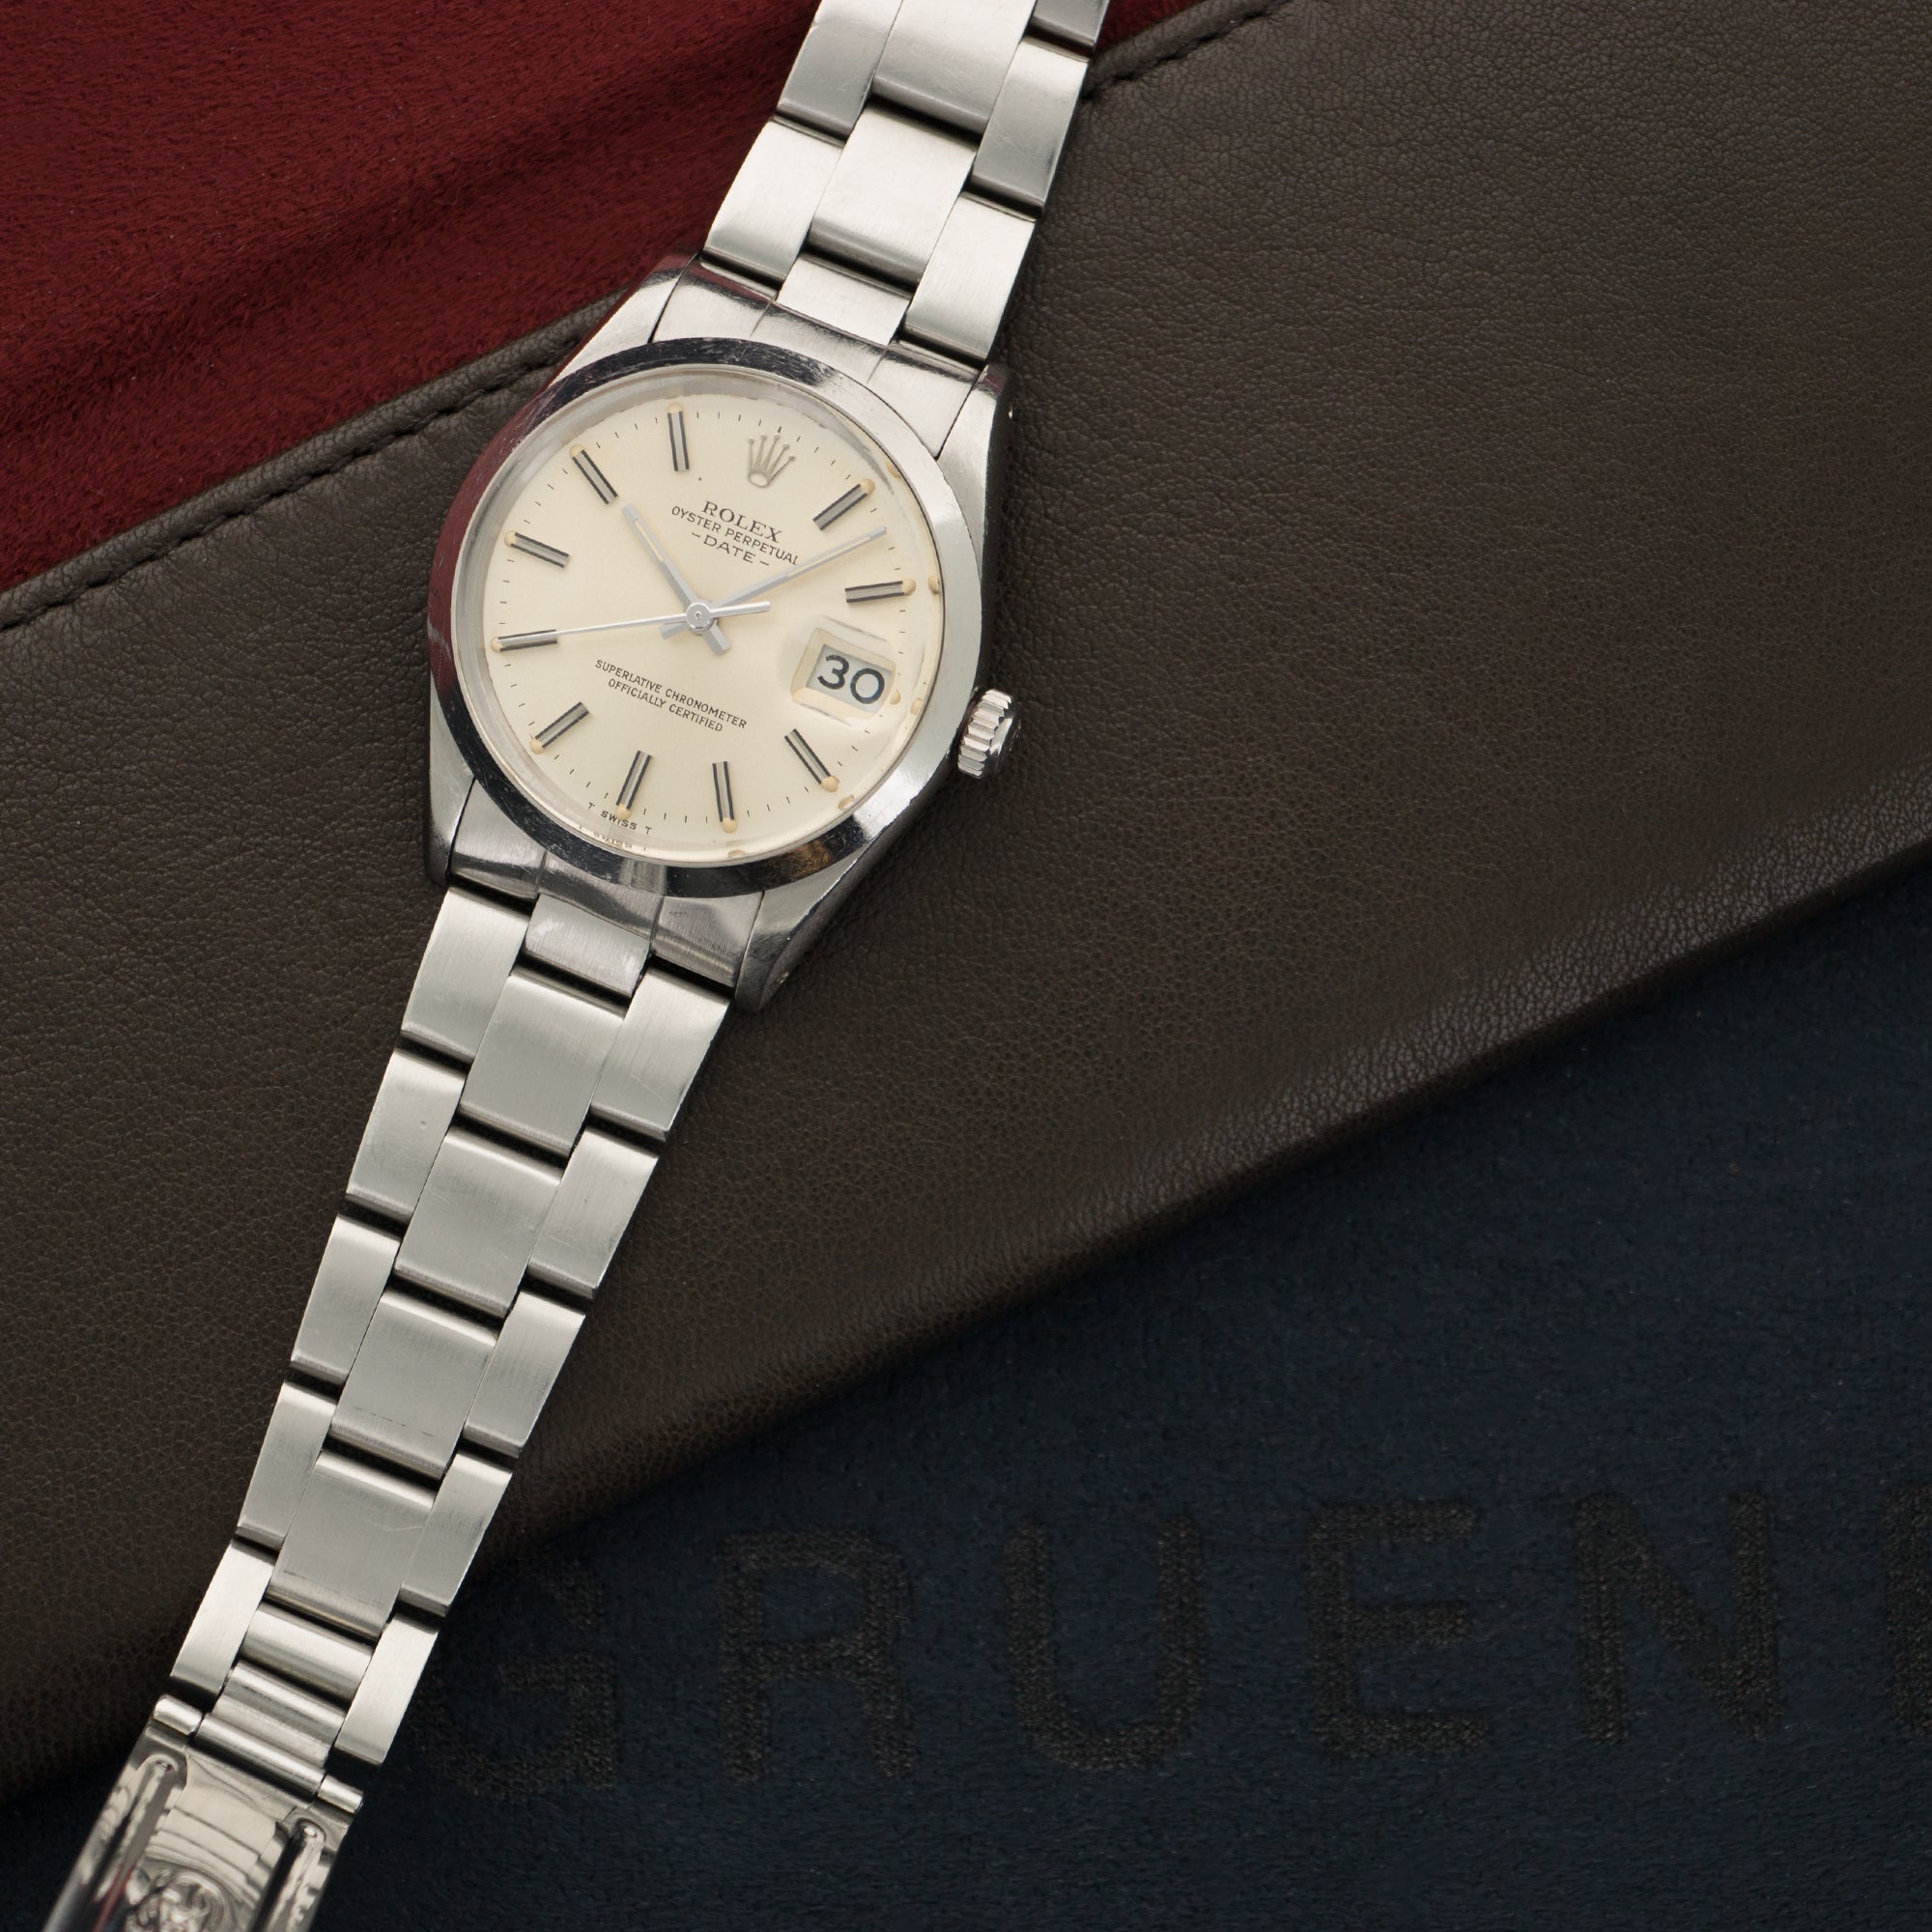 Rolex - Rolex Steel Date Watch Ref. 15000 with Paper - The Keystone Watches